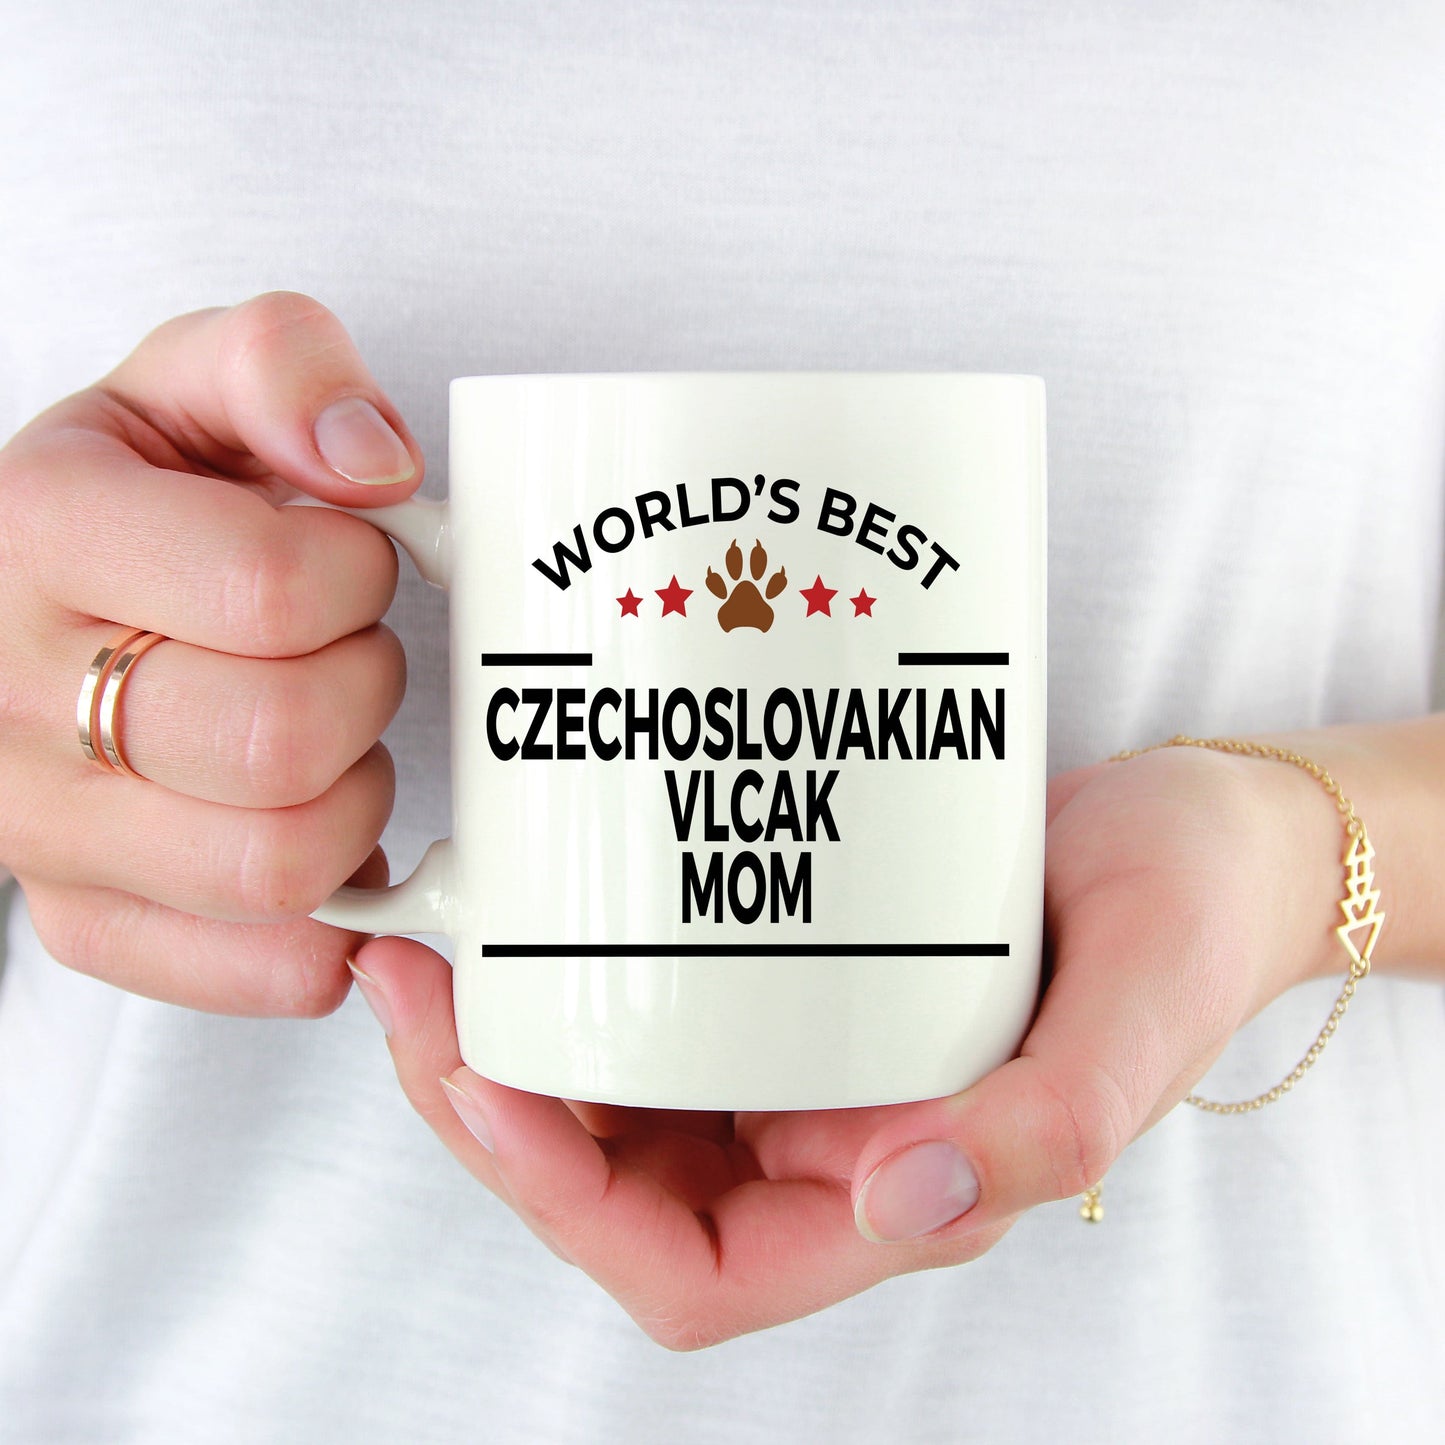 Czechoslovakian Vlcak Dog Lover Gift World's Best Mom Birthday Mother's Day White Ceramic Coffee Mug